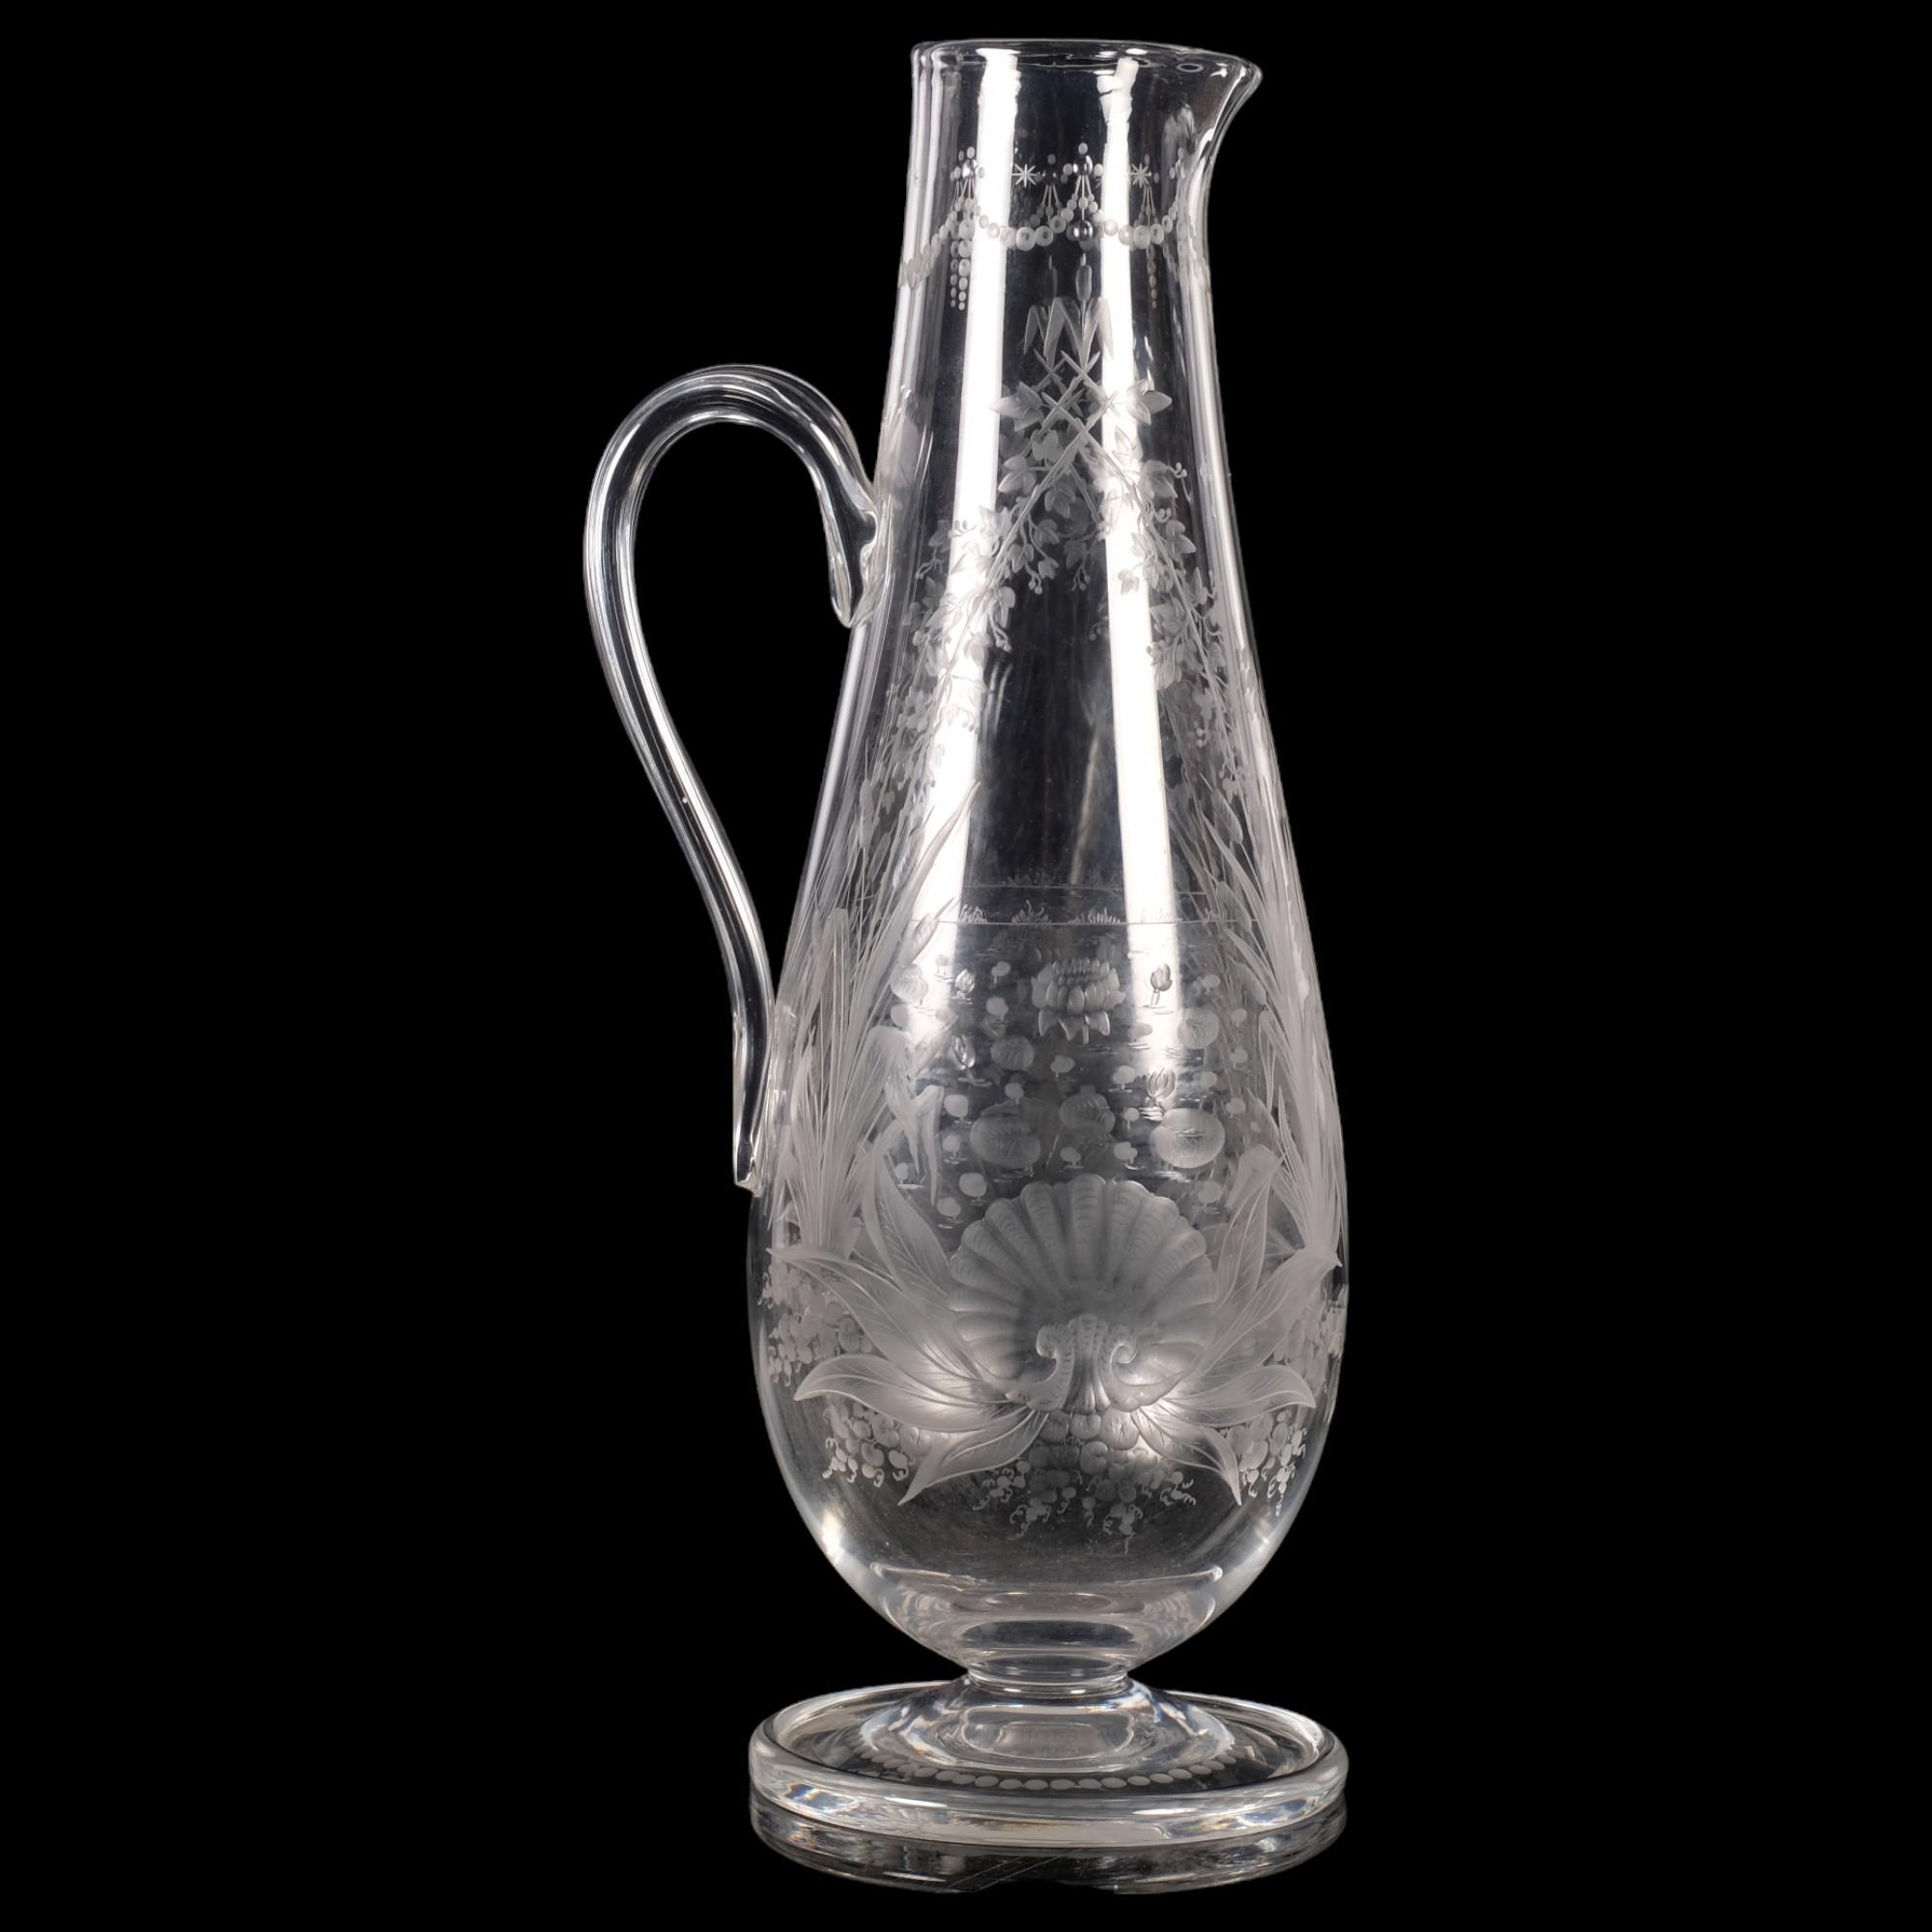 An Antique Stourbridge etched glass Claret jug, with floral decoration, on turned foot, H30.5cm